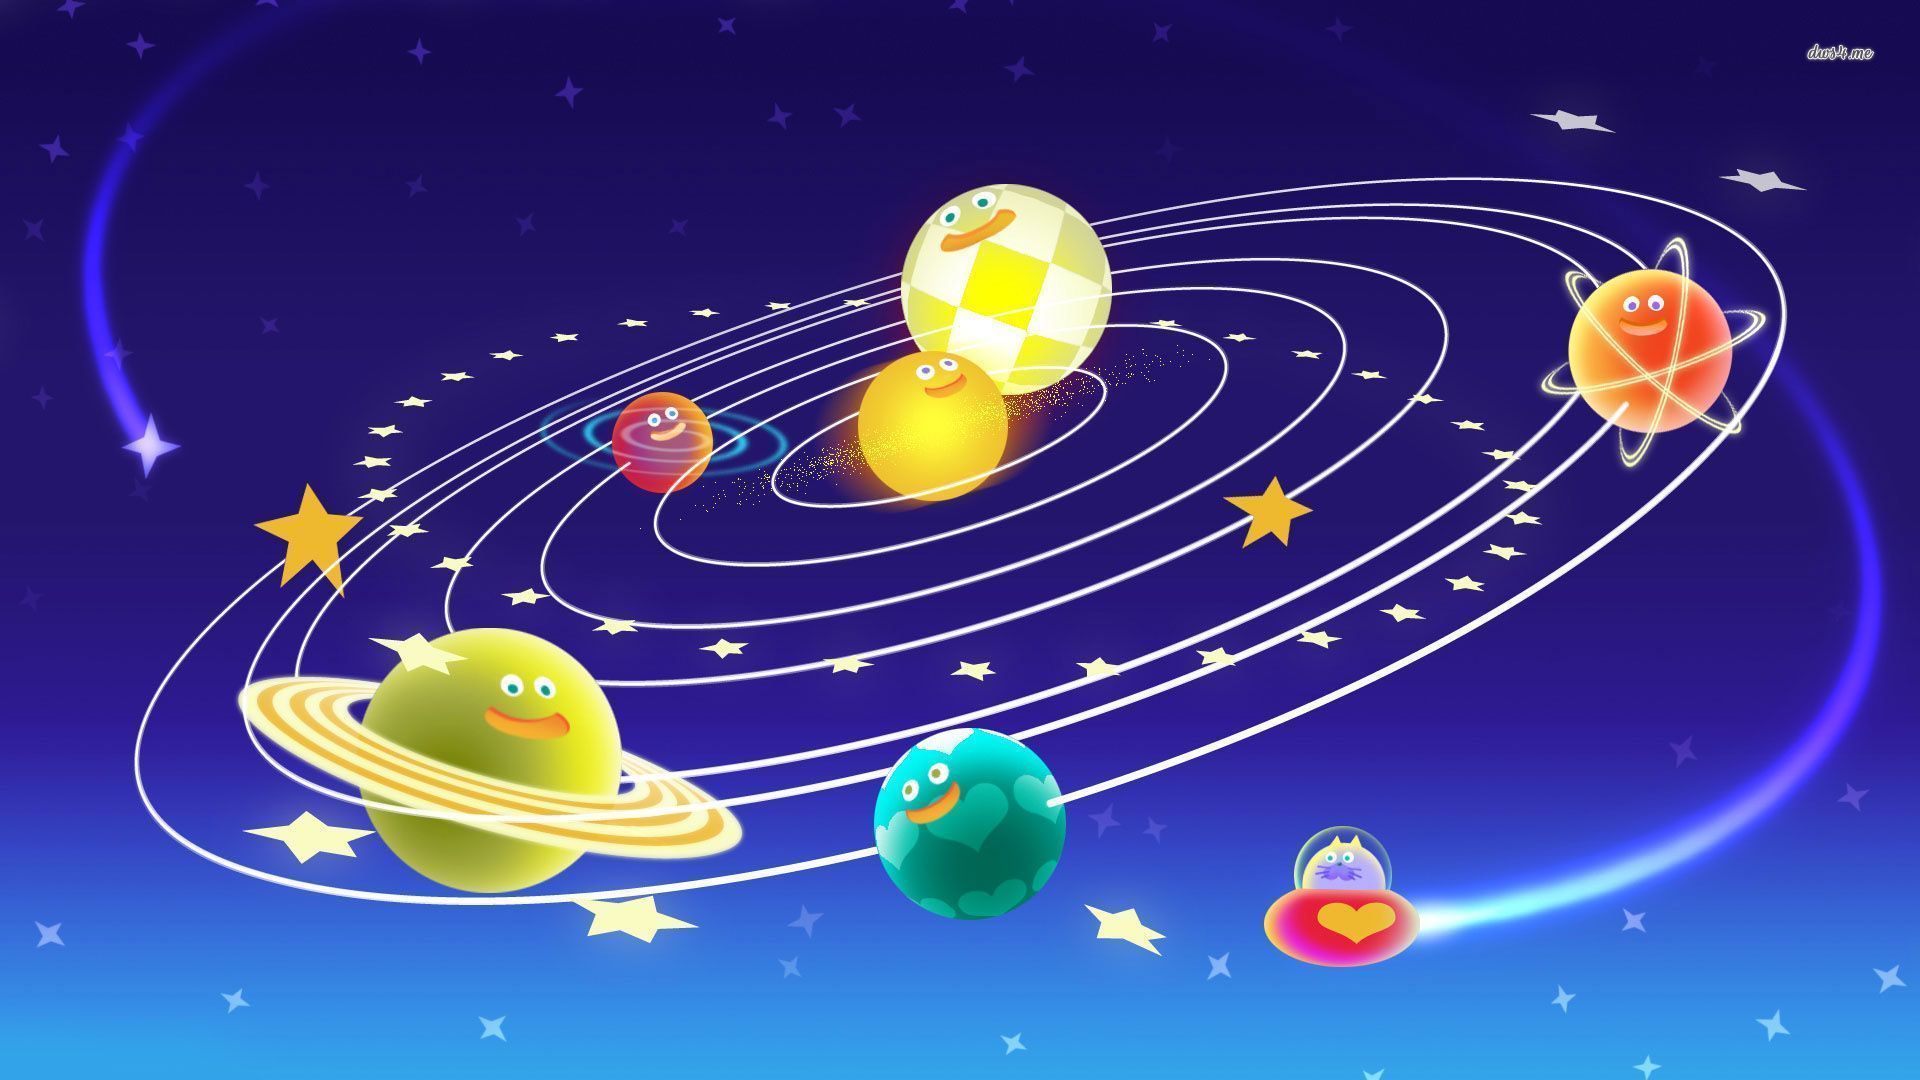 Cute Solar System wallpaper - Digital Art wallpapers -